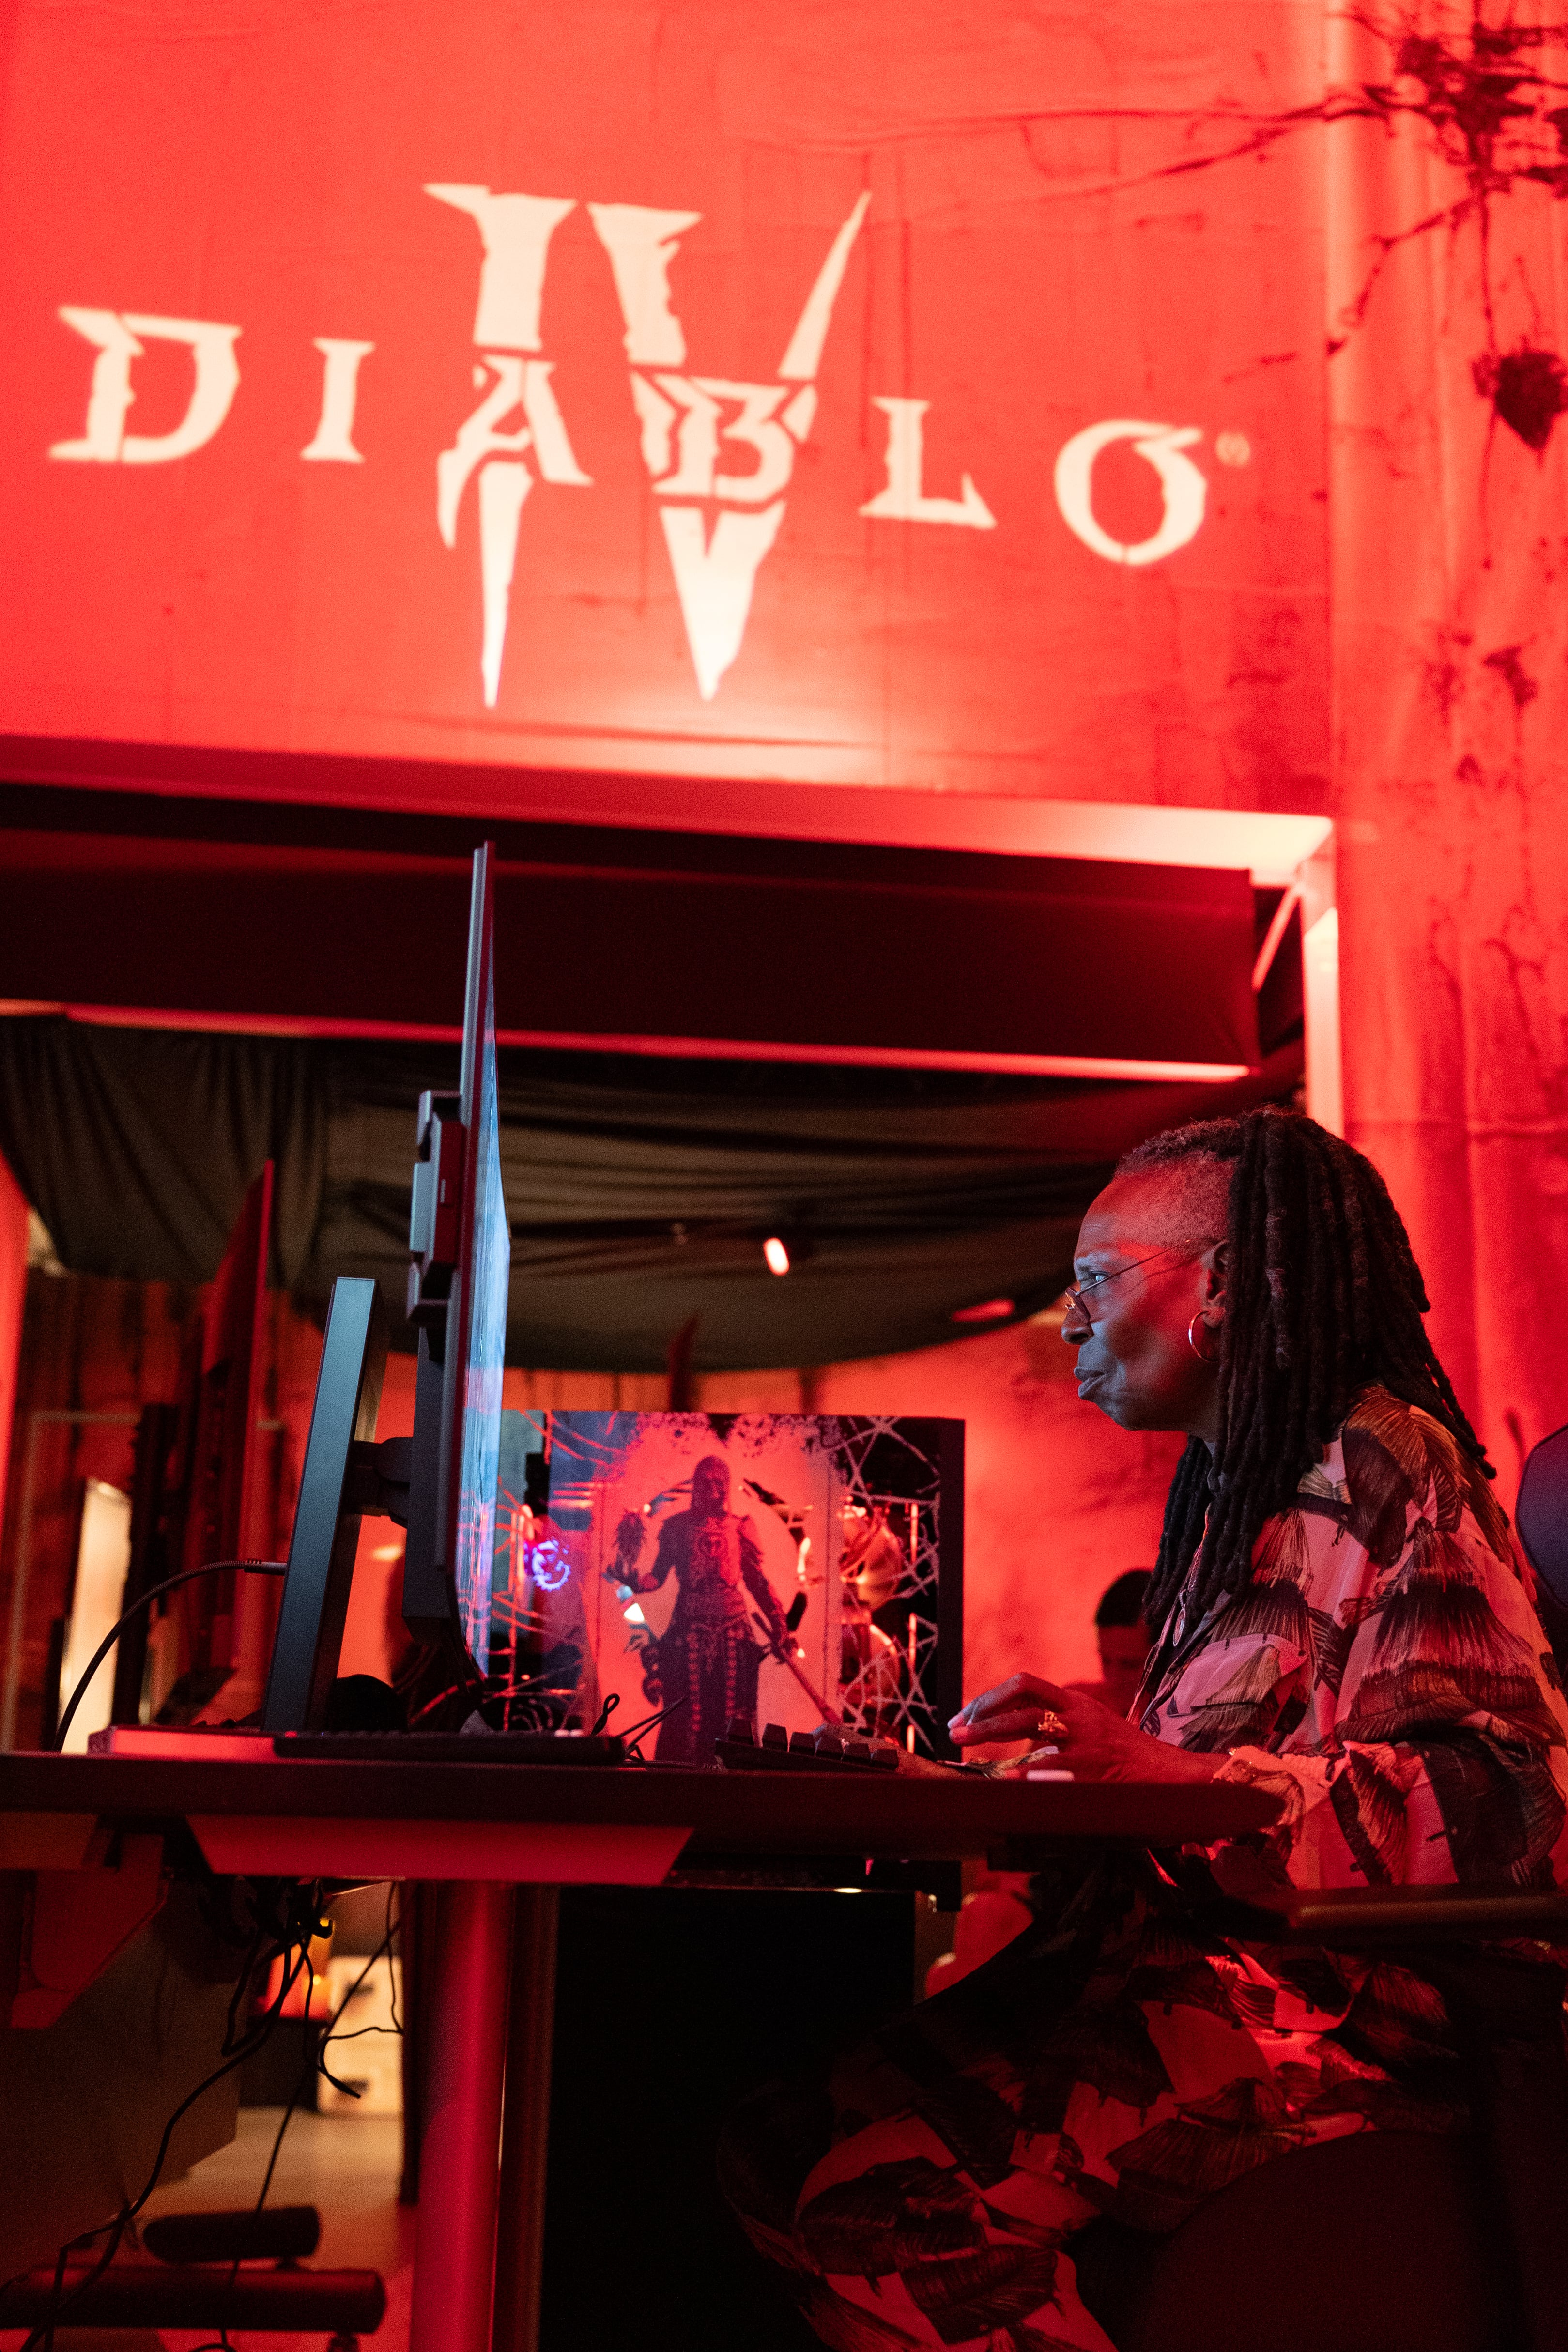 Whoopi Goldberg plays on a computer beneath a large Diablo 4 logo.